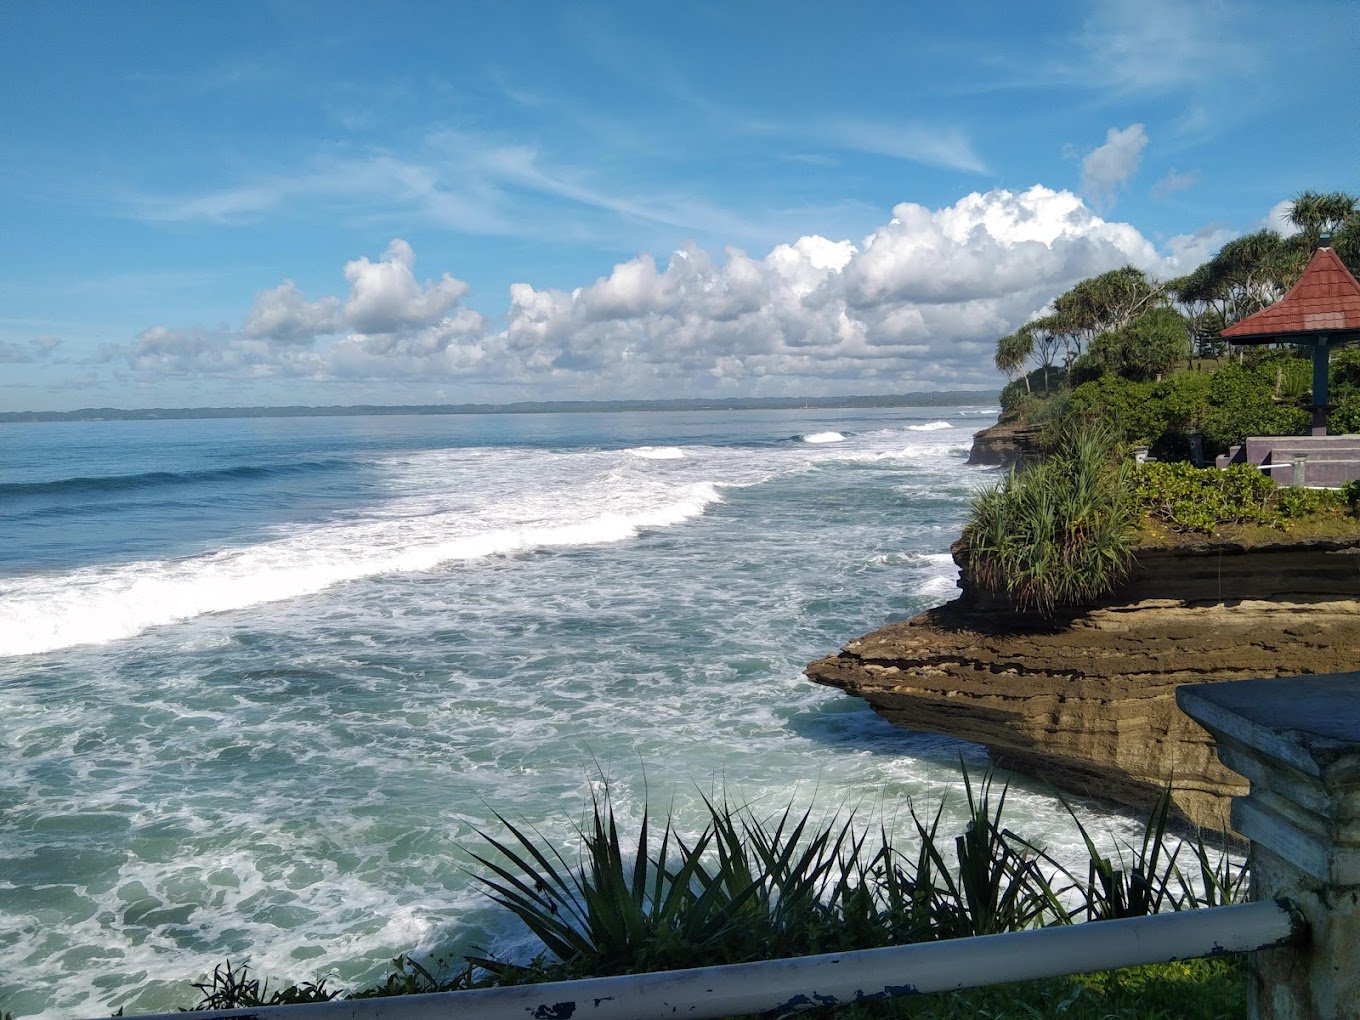 Daya Tarik Obyek Wisata Pantai Batu Hiu di Ciamis Jawa Barat